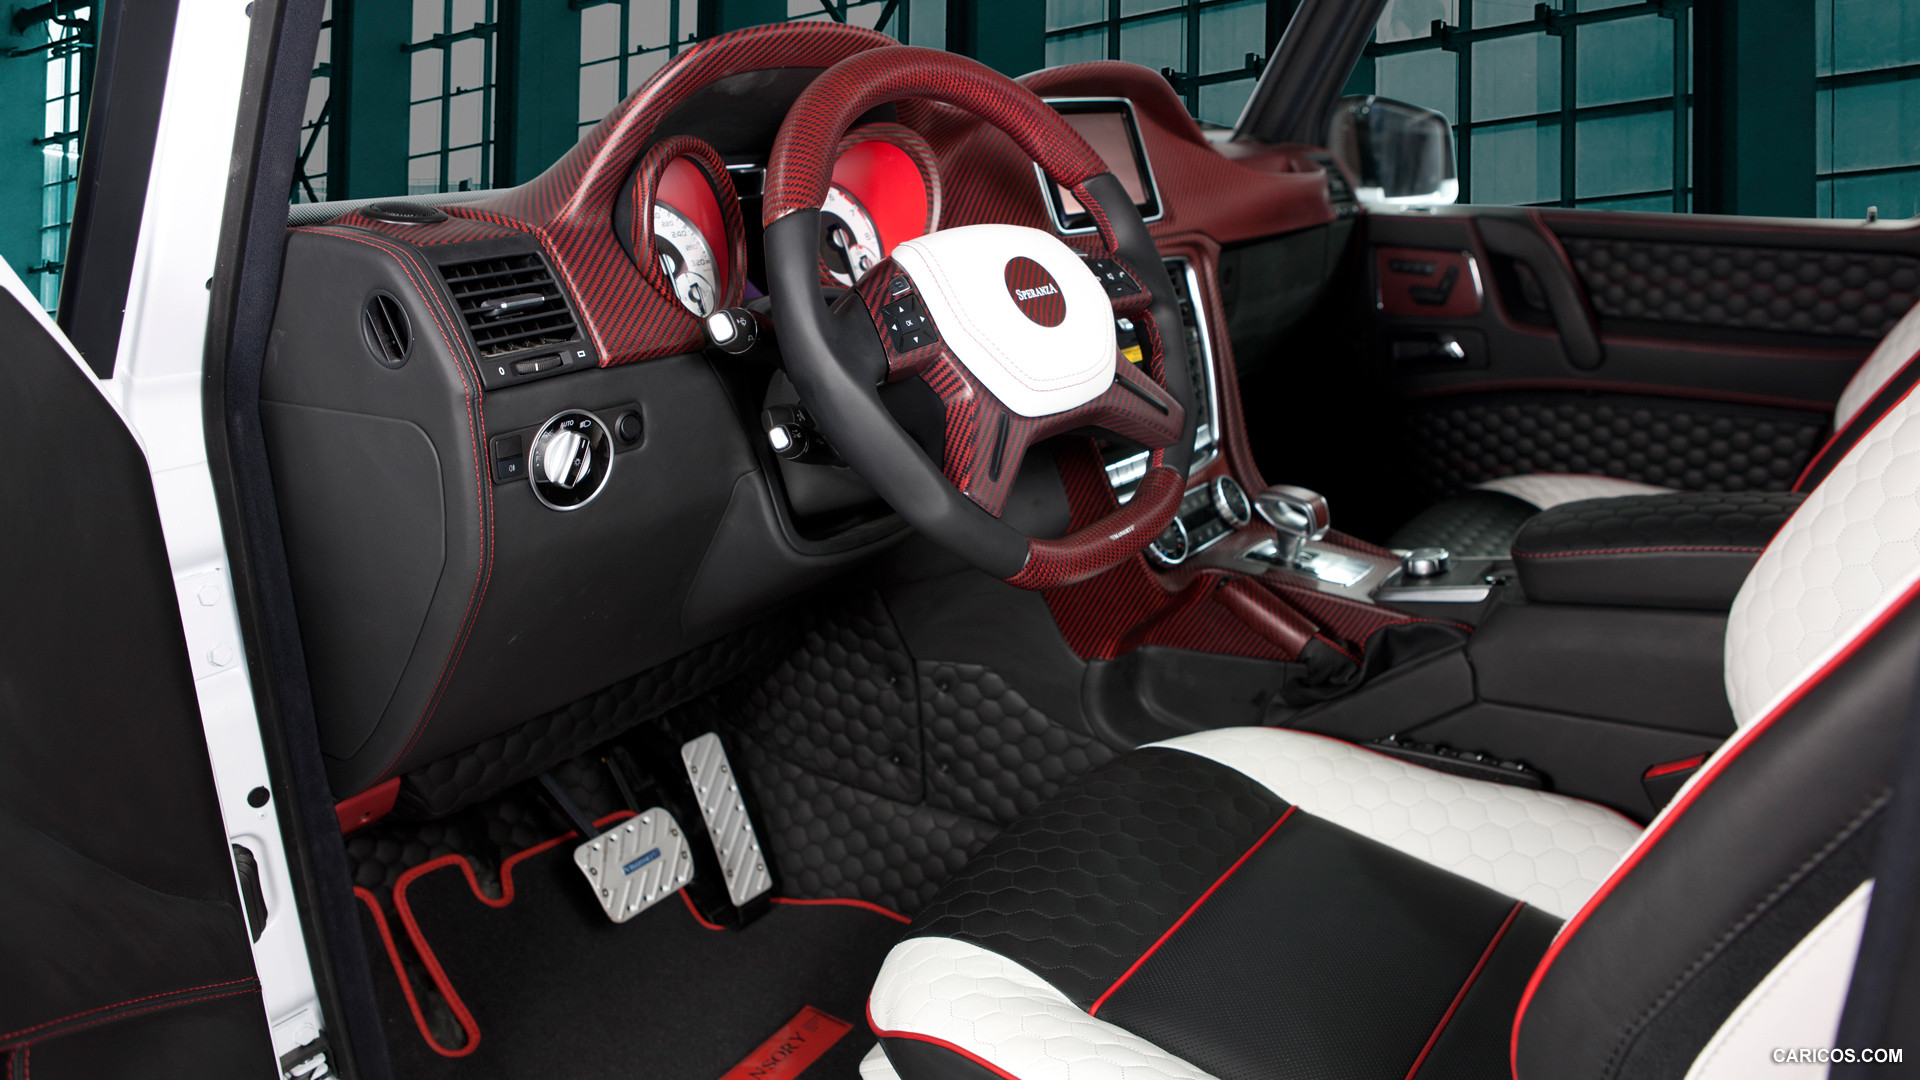 2013 Mansory Speranza based on M-Benz G-Class Cabrio  - Interior, #3 of 5